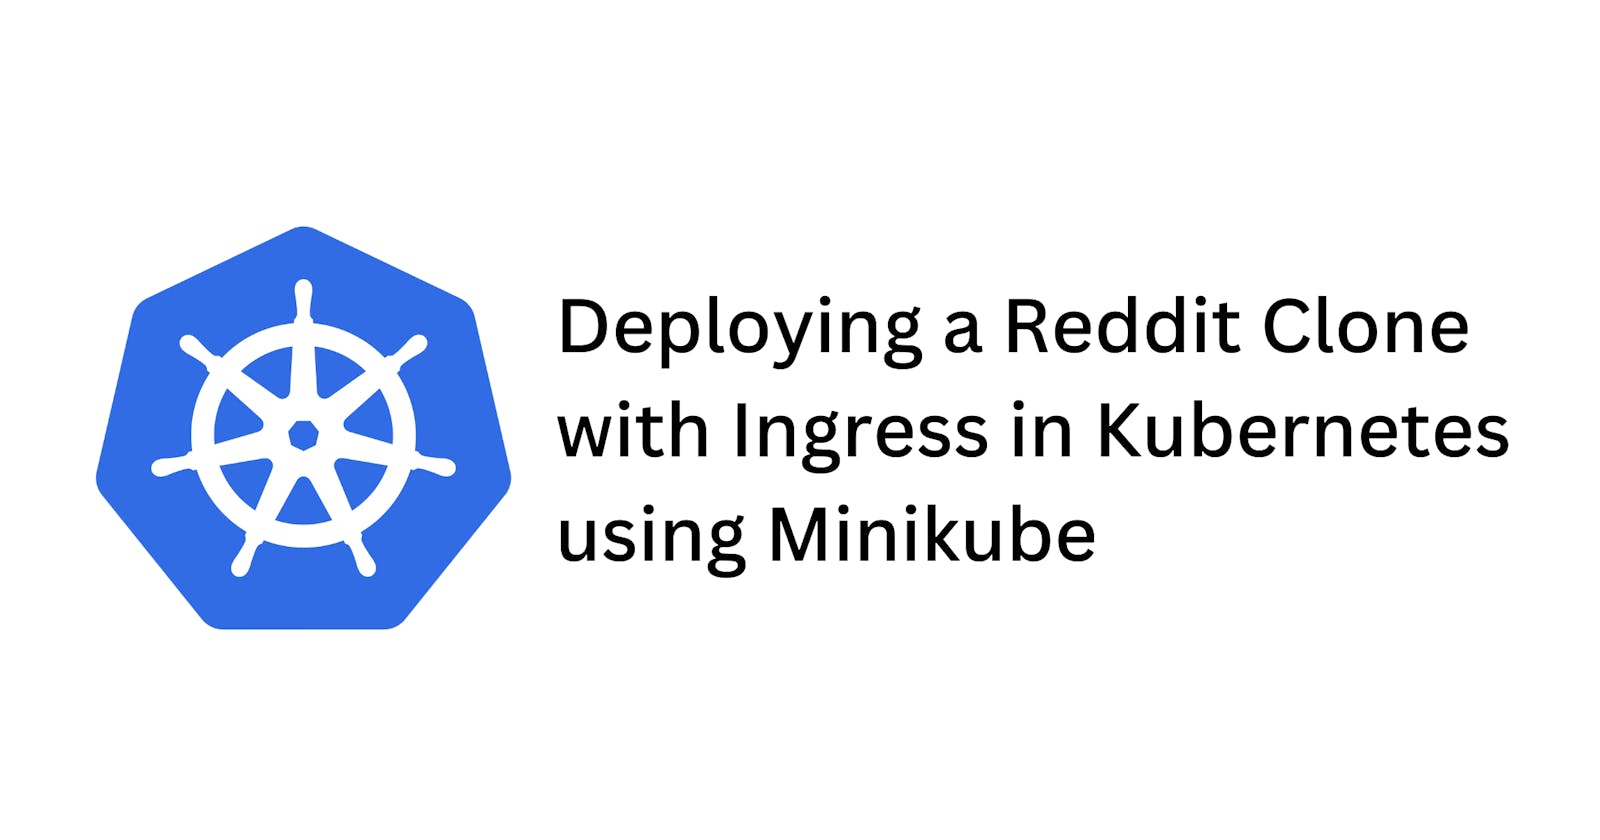 Deploying a Reddit Clone with Ingress in Kubernetes using Minikube